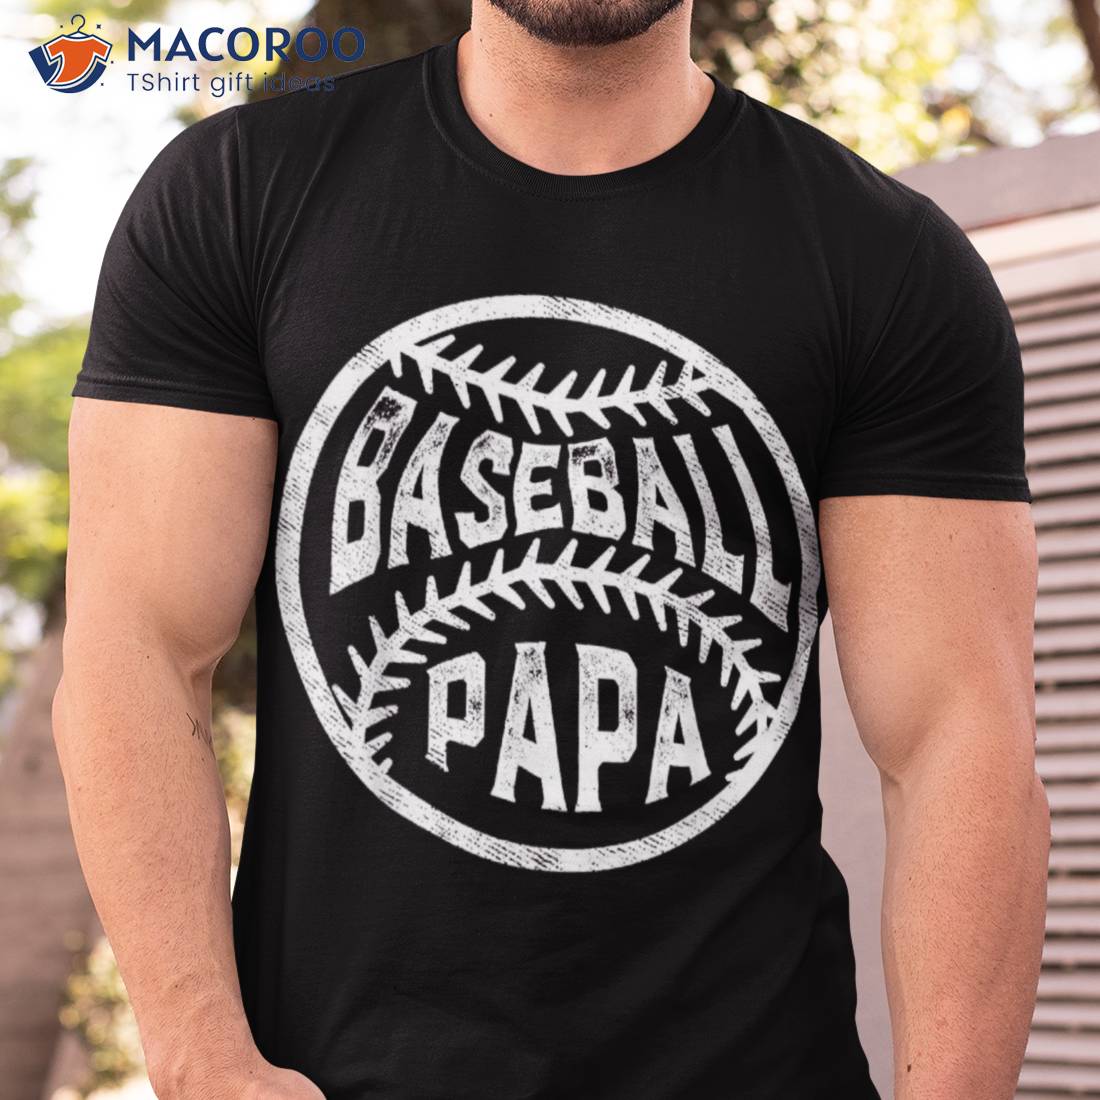 vintage baseball shirt designs